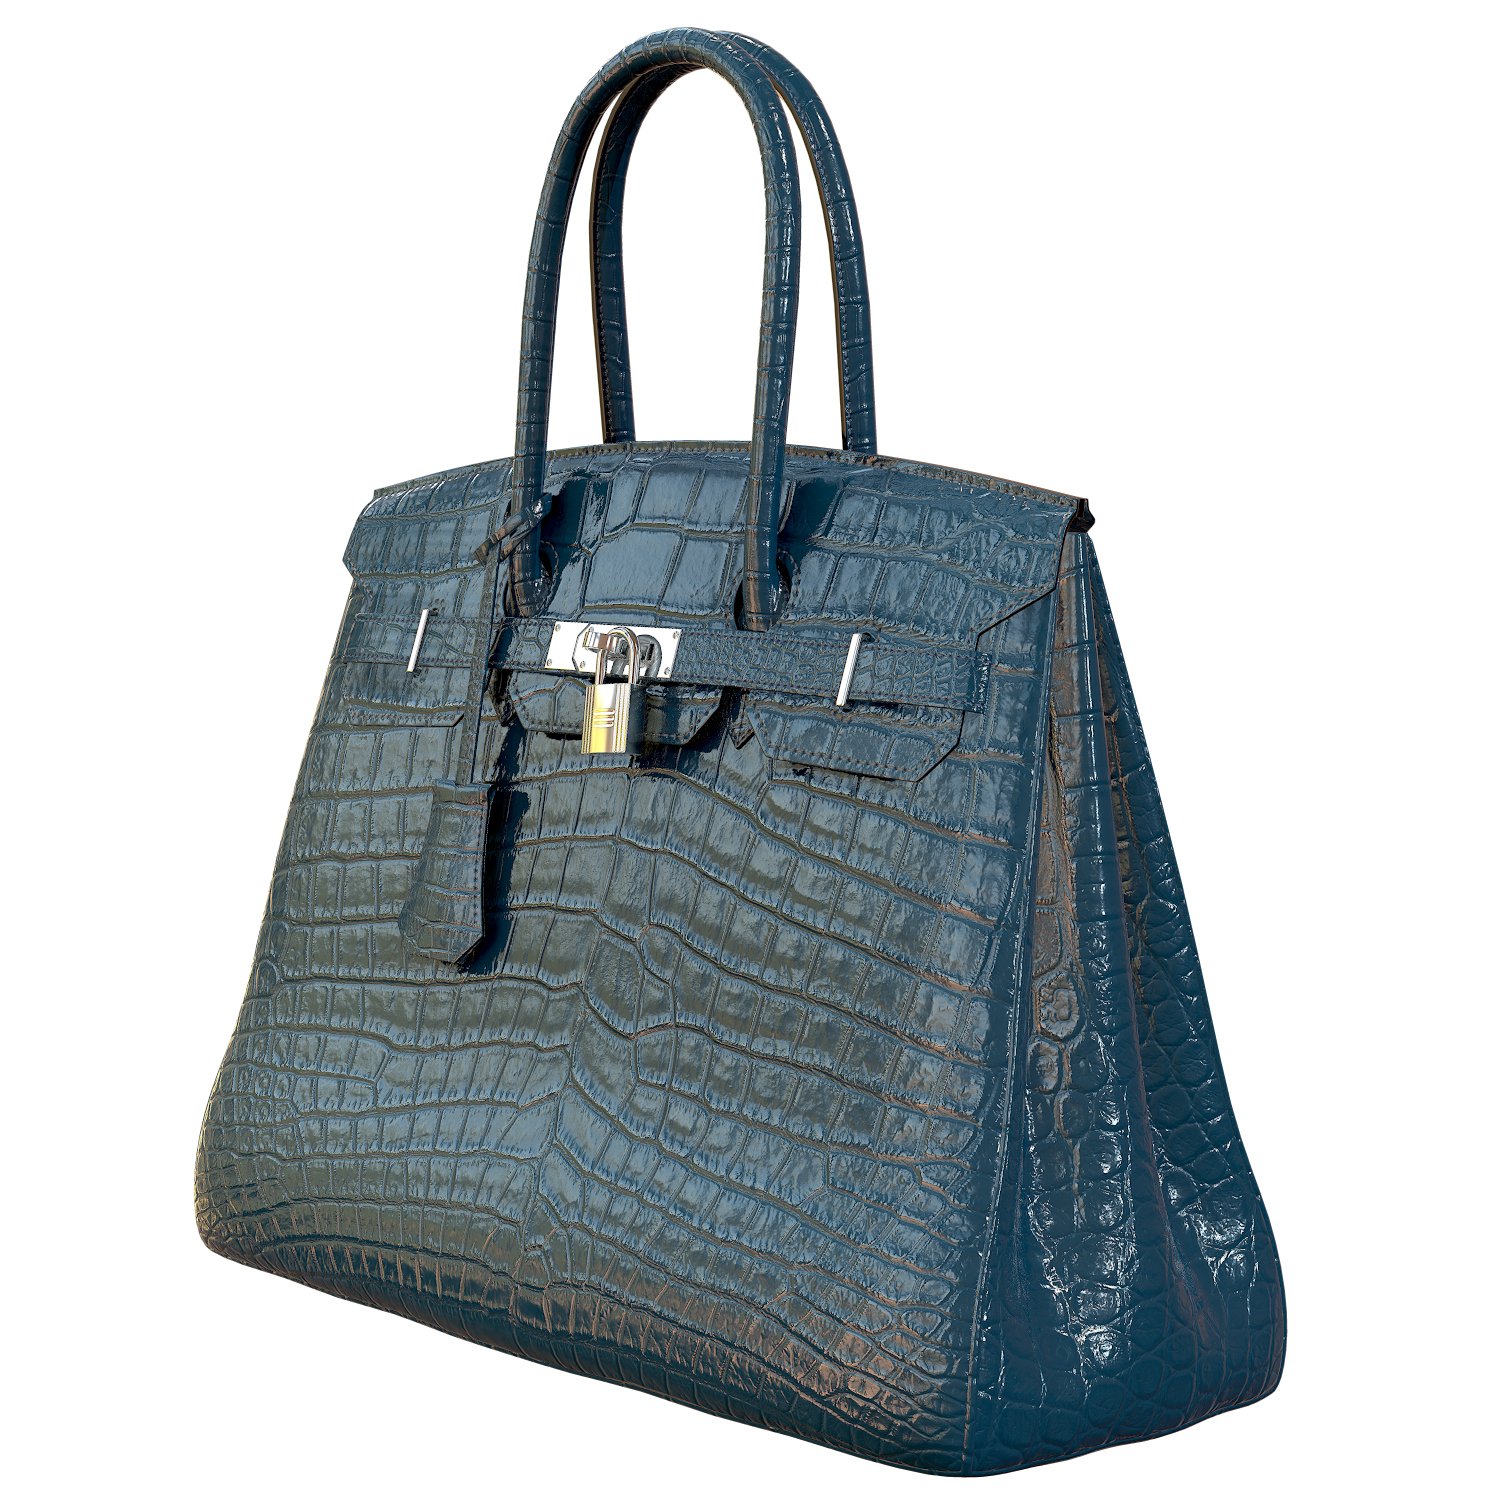 3D model Hermes Birkin Bag Blue Crocodile Leather VR / AR / low-poly